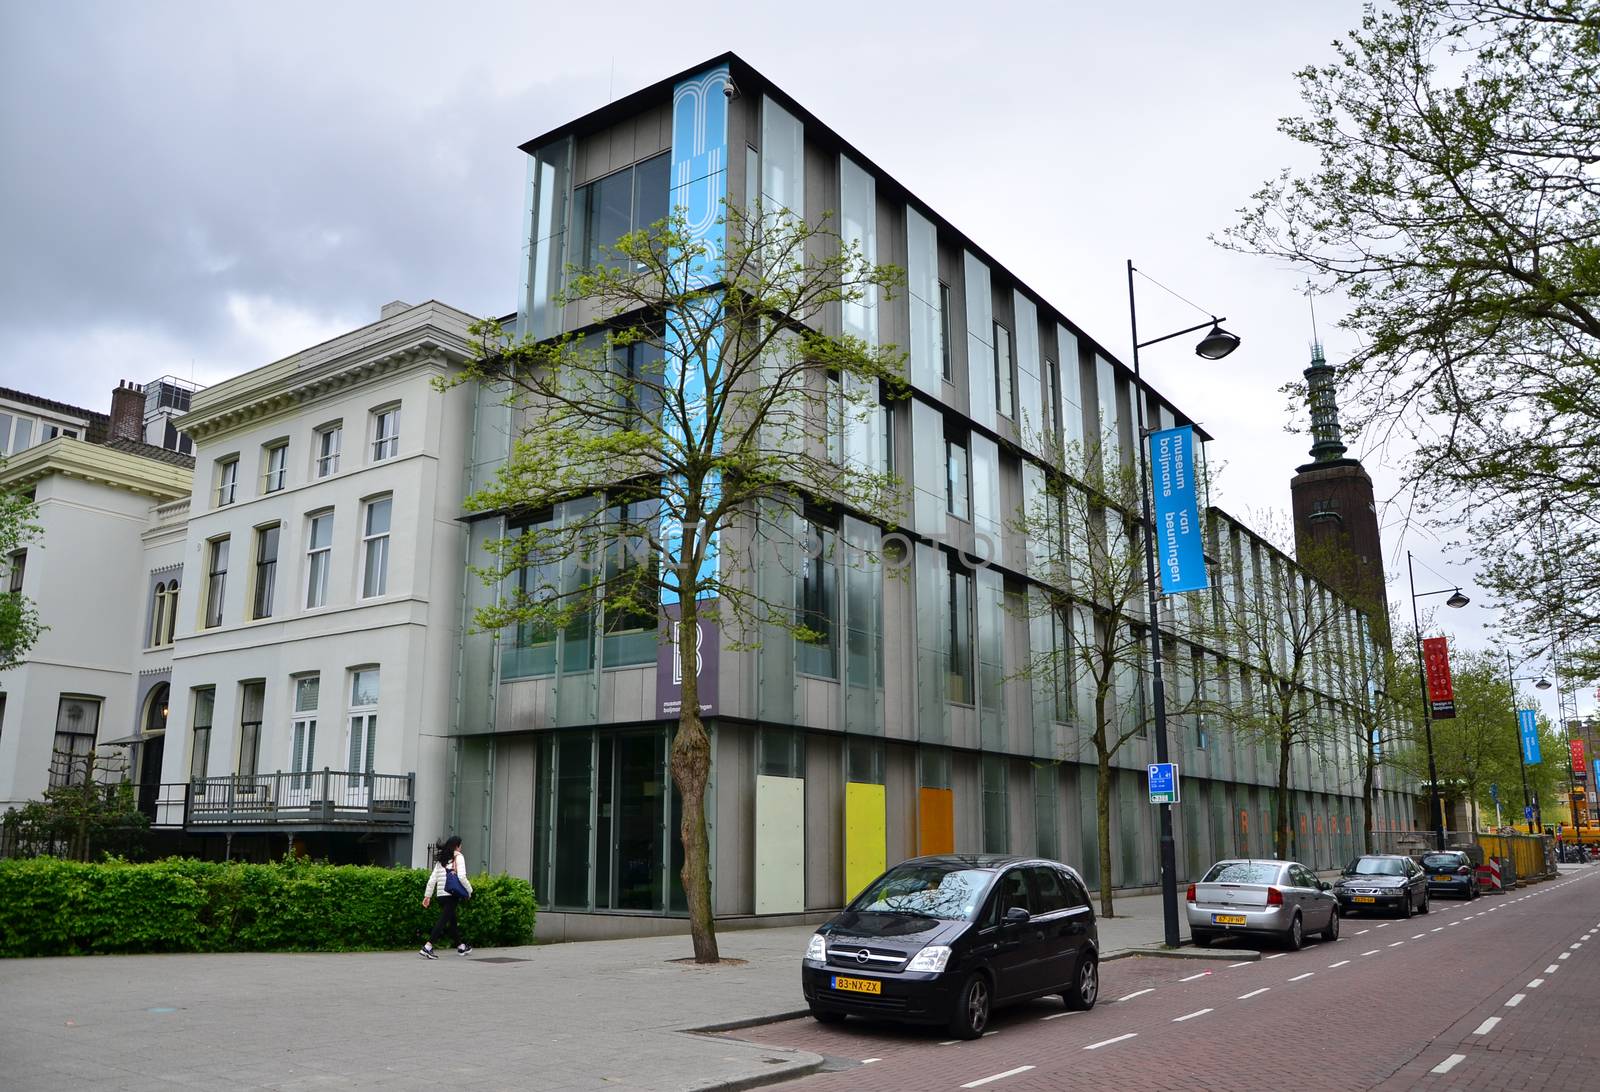 Rotterdam, Netherlands - May 9, 2015: People visit Museum Boijmans Van Beuningen in Rotterdam by siraanamwong